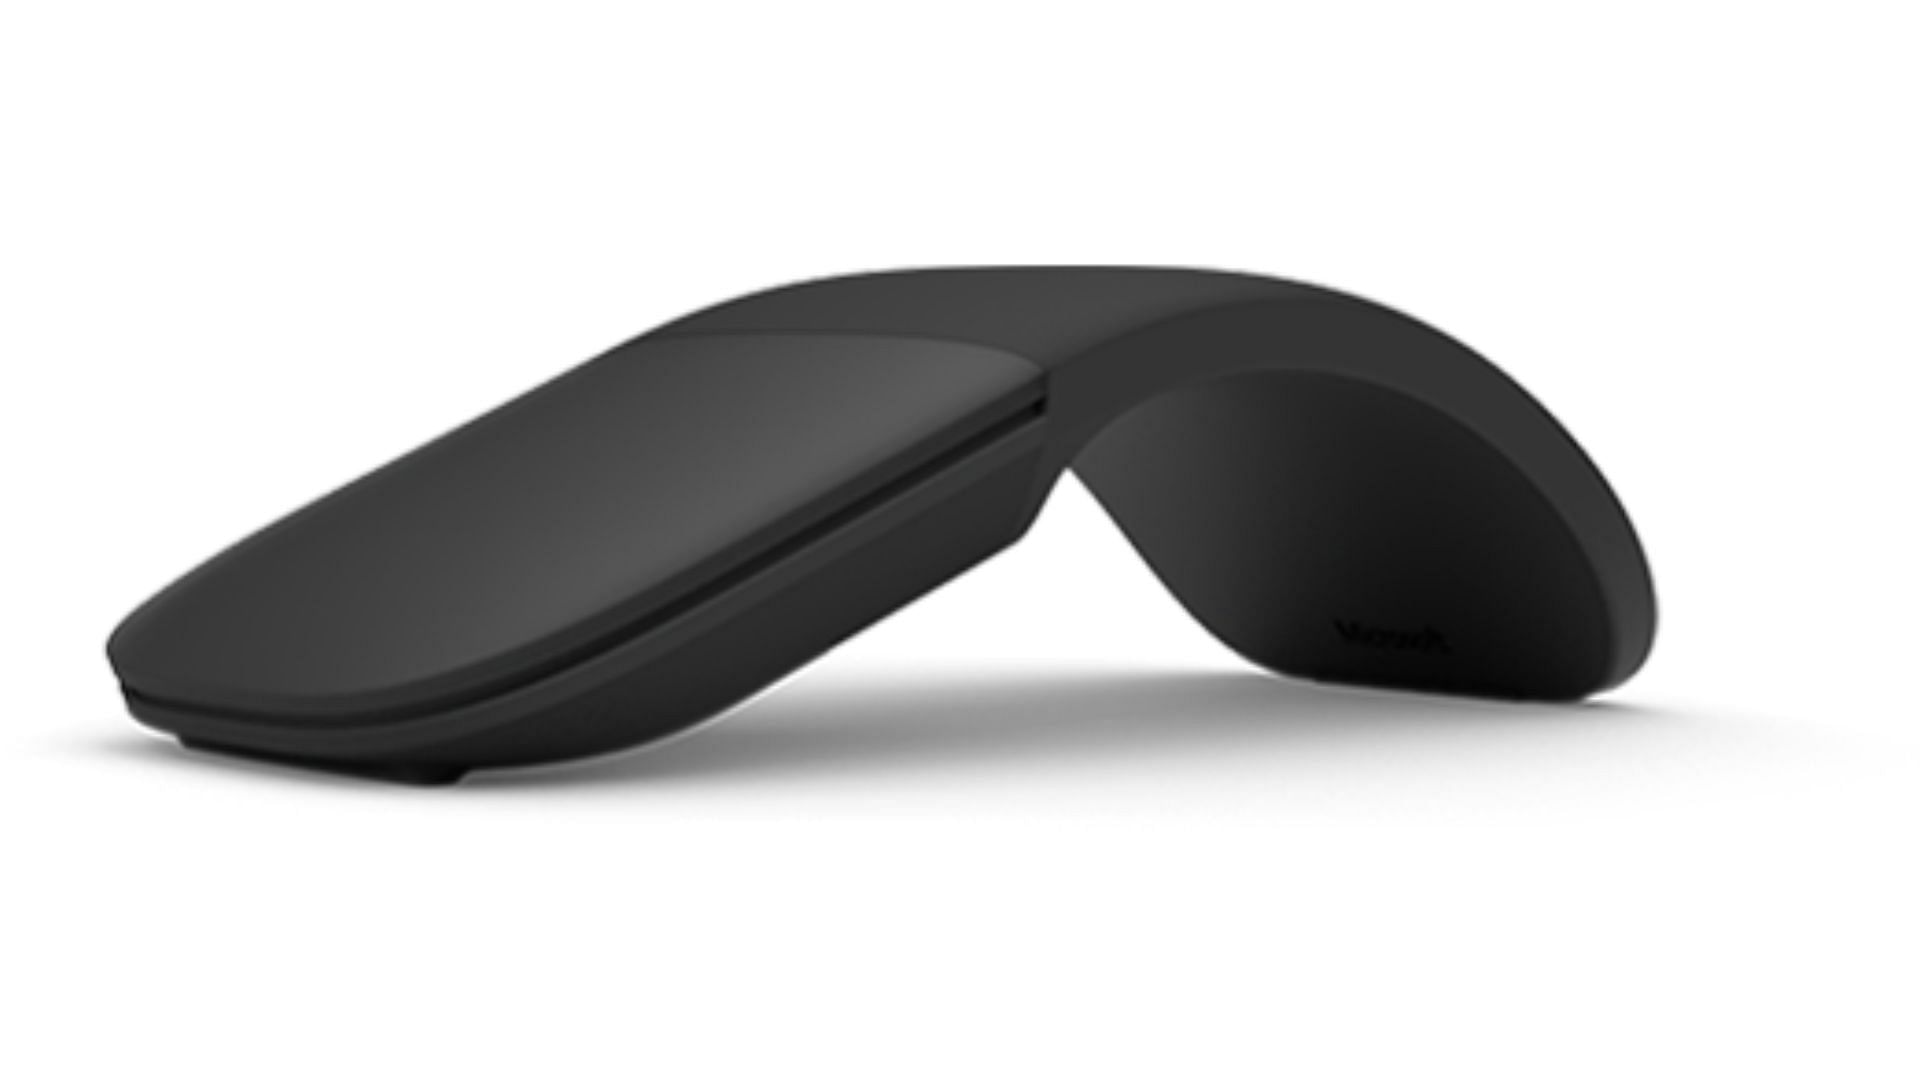 Microsoft Surface Arc Mouse - best Apple Magic Mouse alternatives (Image via Microsoft)